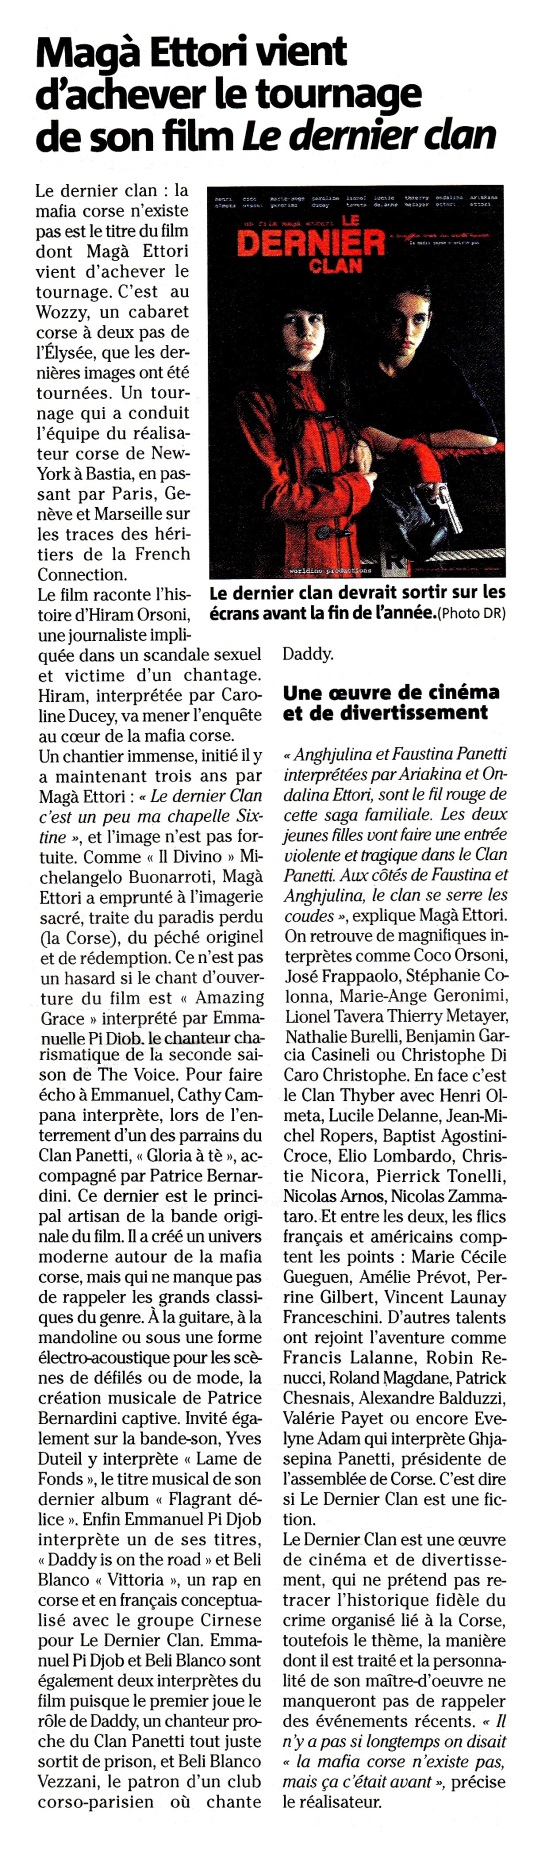 LE DERNIER CLAN (un film Magà Ettori) Corse Matin - 26- 07-2013